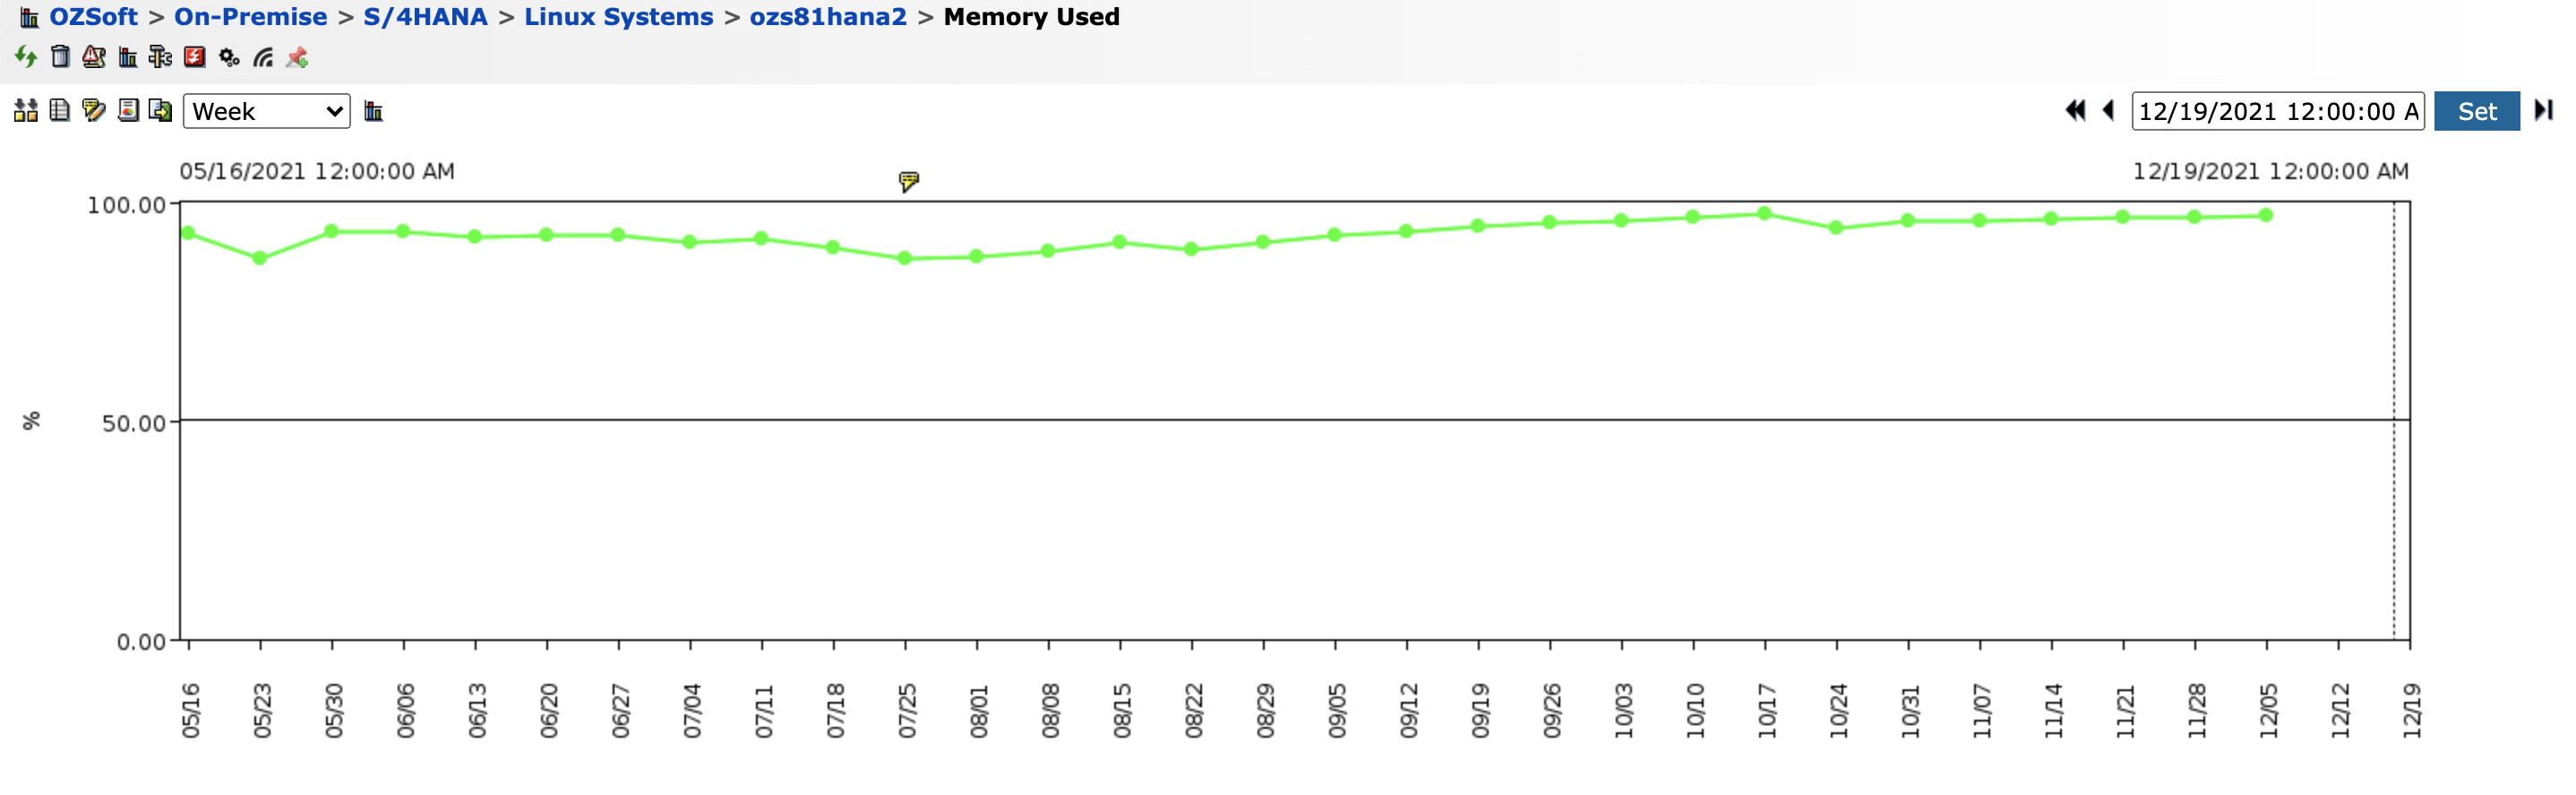 SAP HANA Memory Used